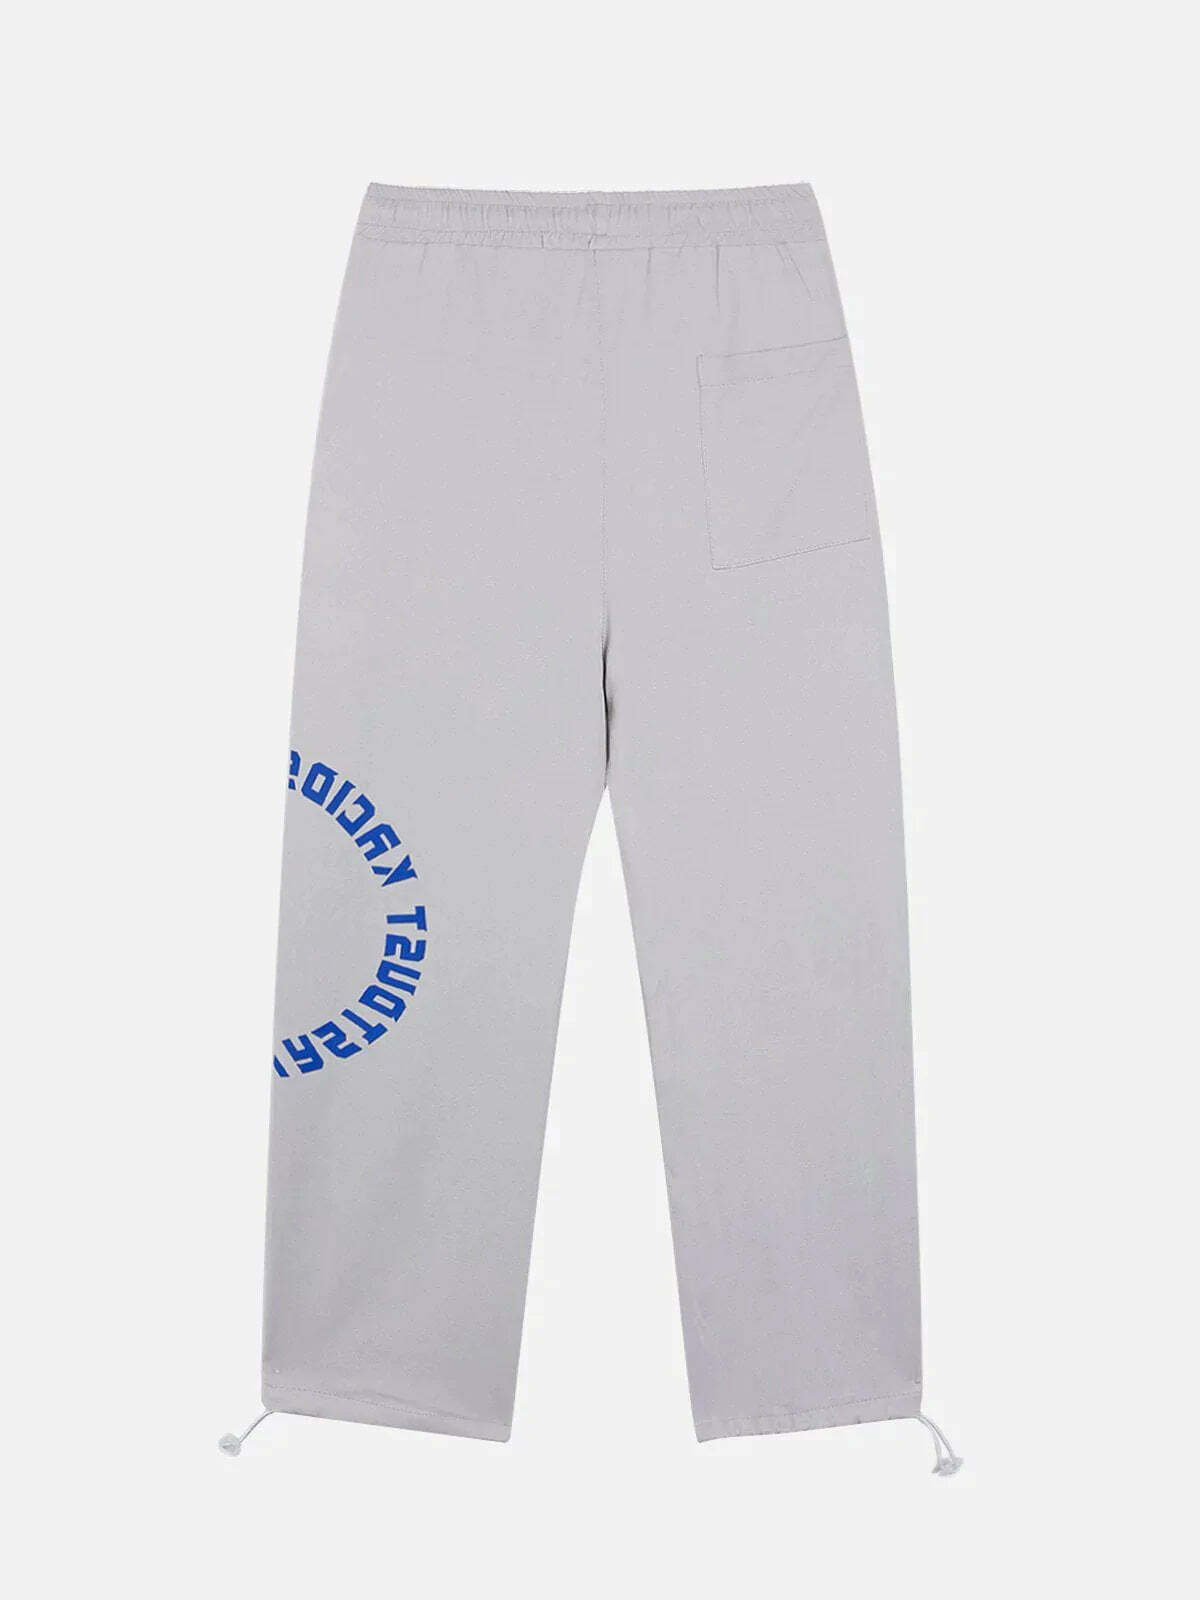 graphics embellished denim pants edgy streetwear essential 1098